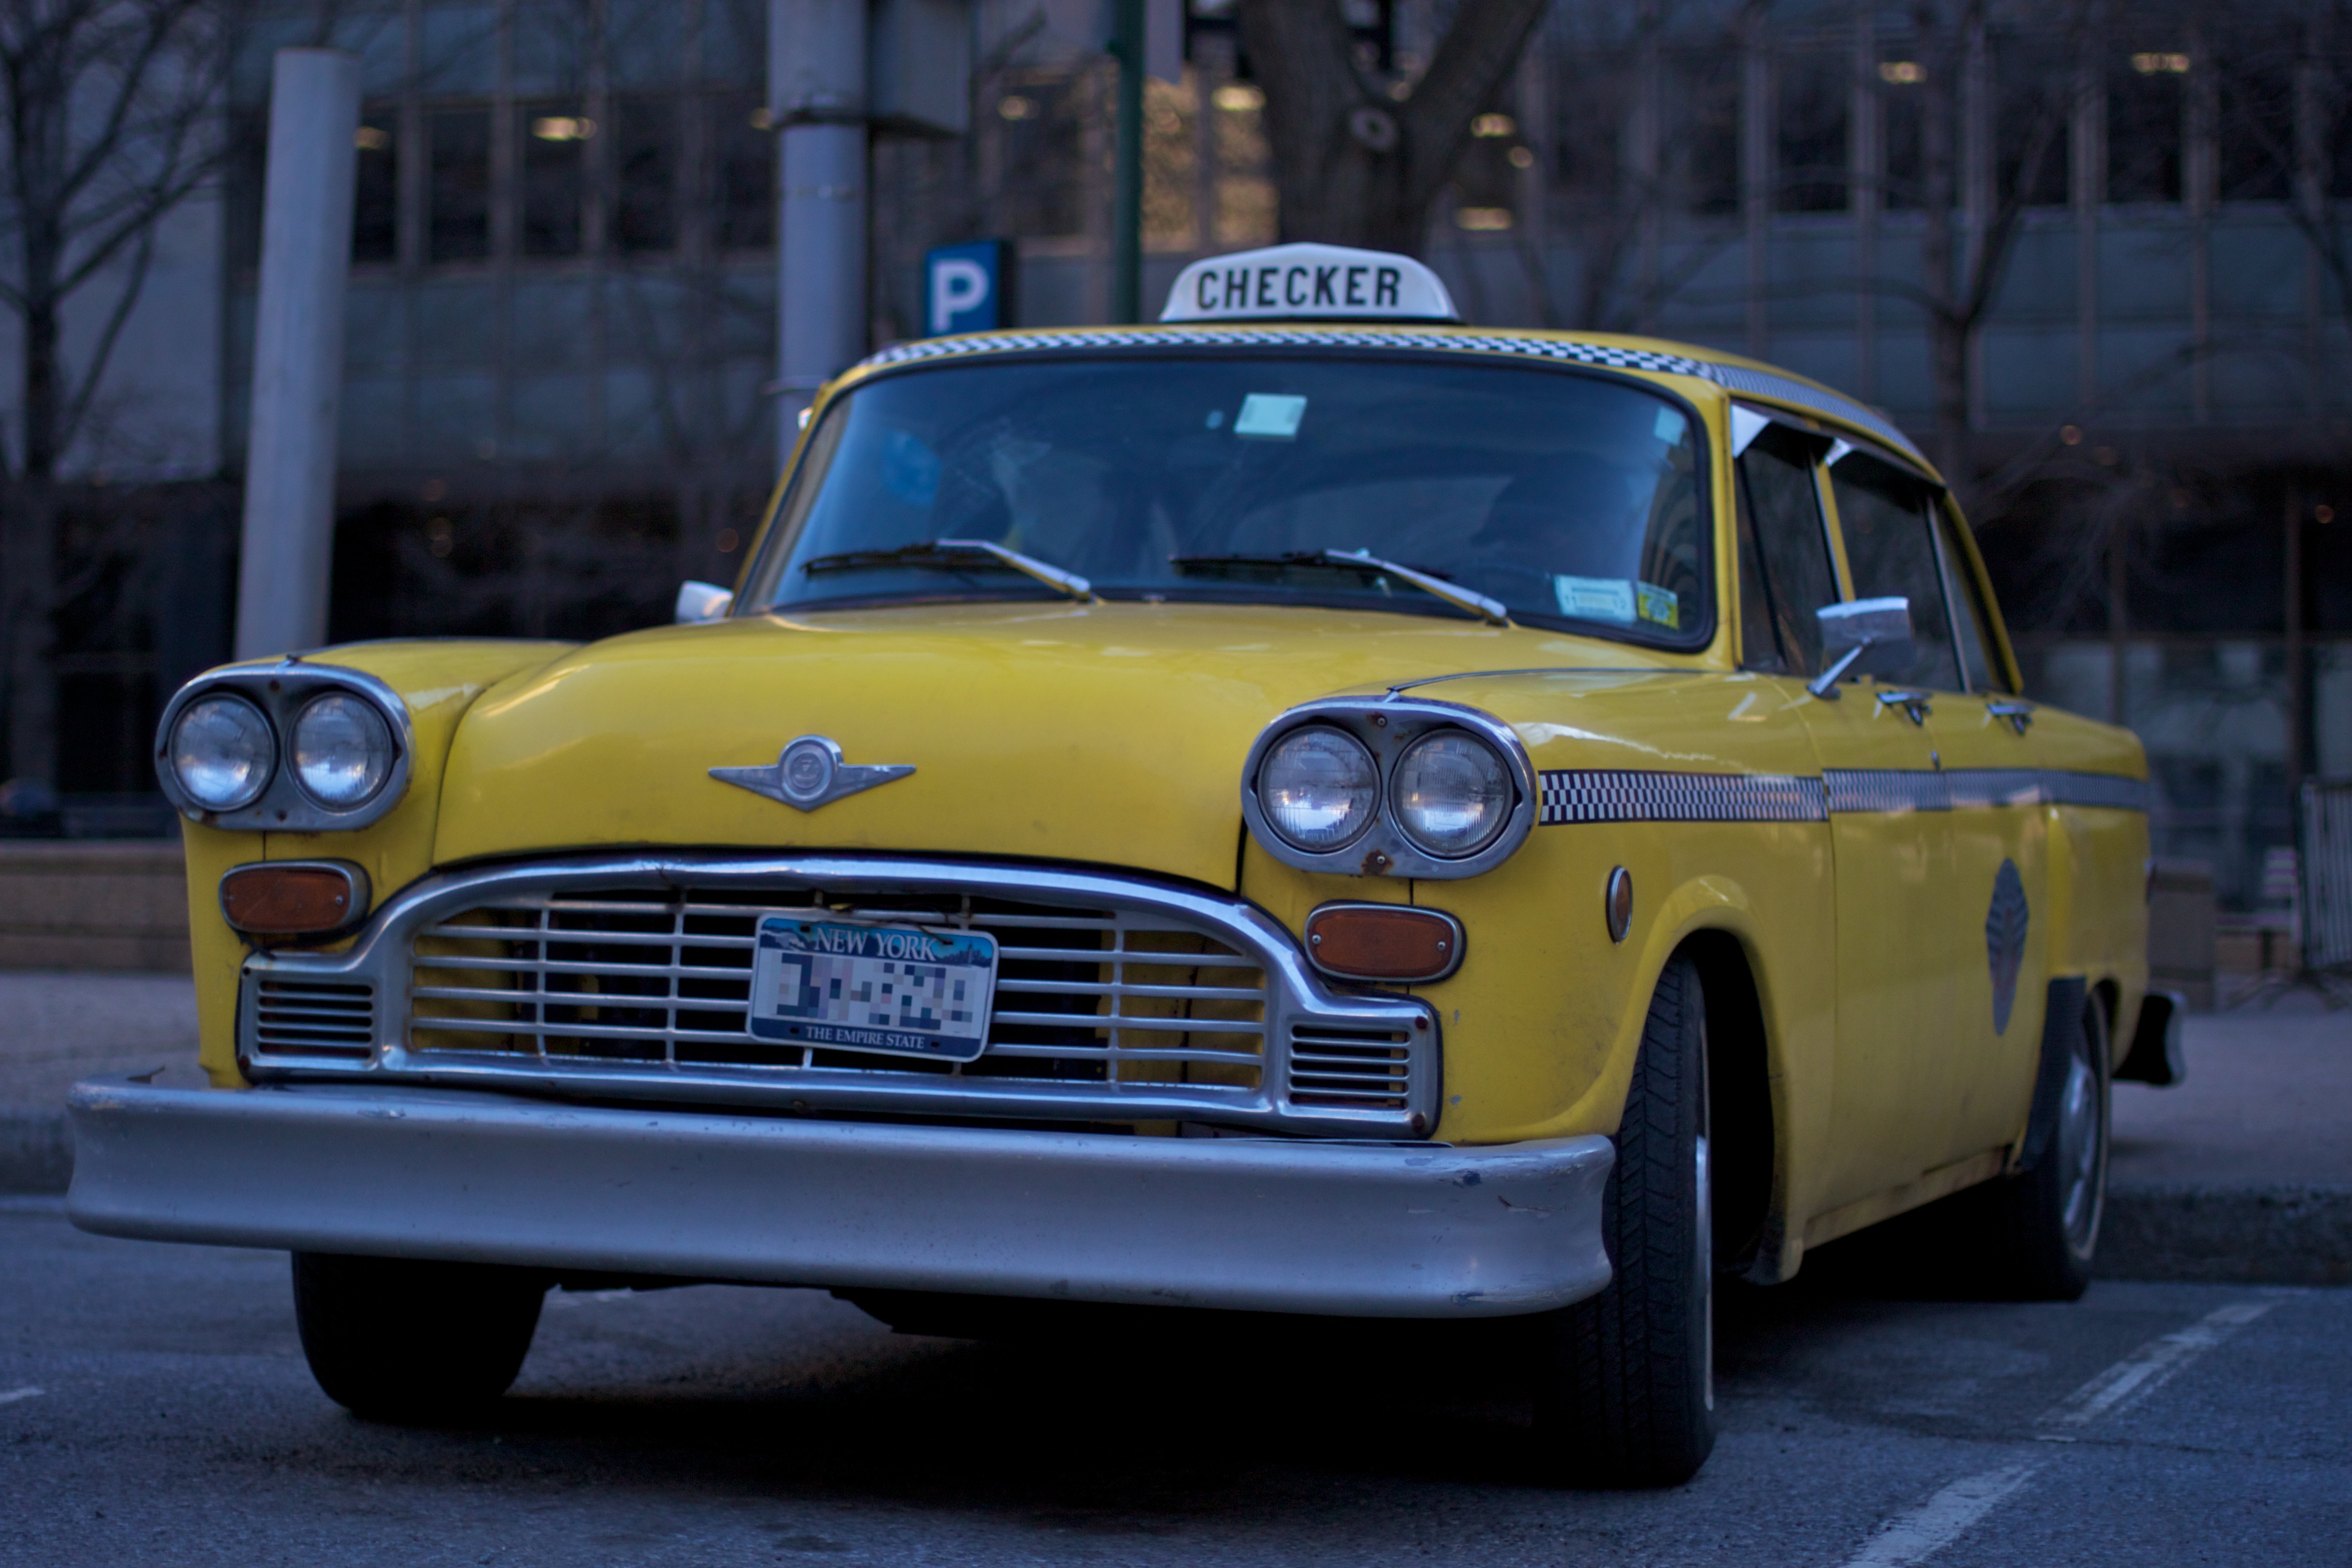 Fichier: Checker Taxi Cab.jpg - Wikimedia Commons